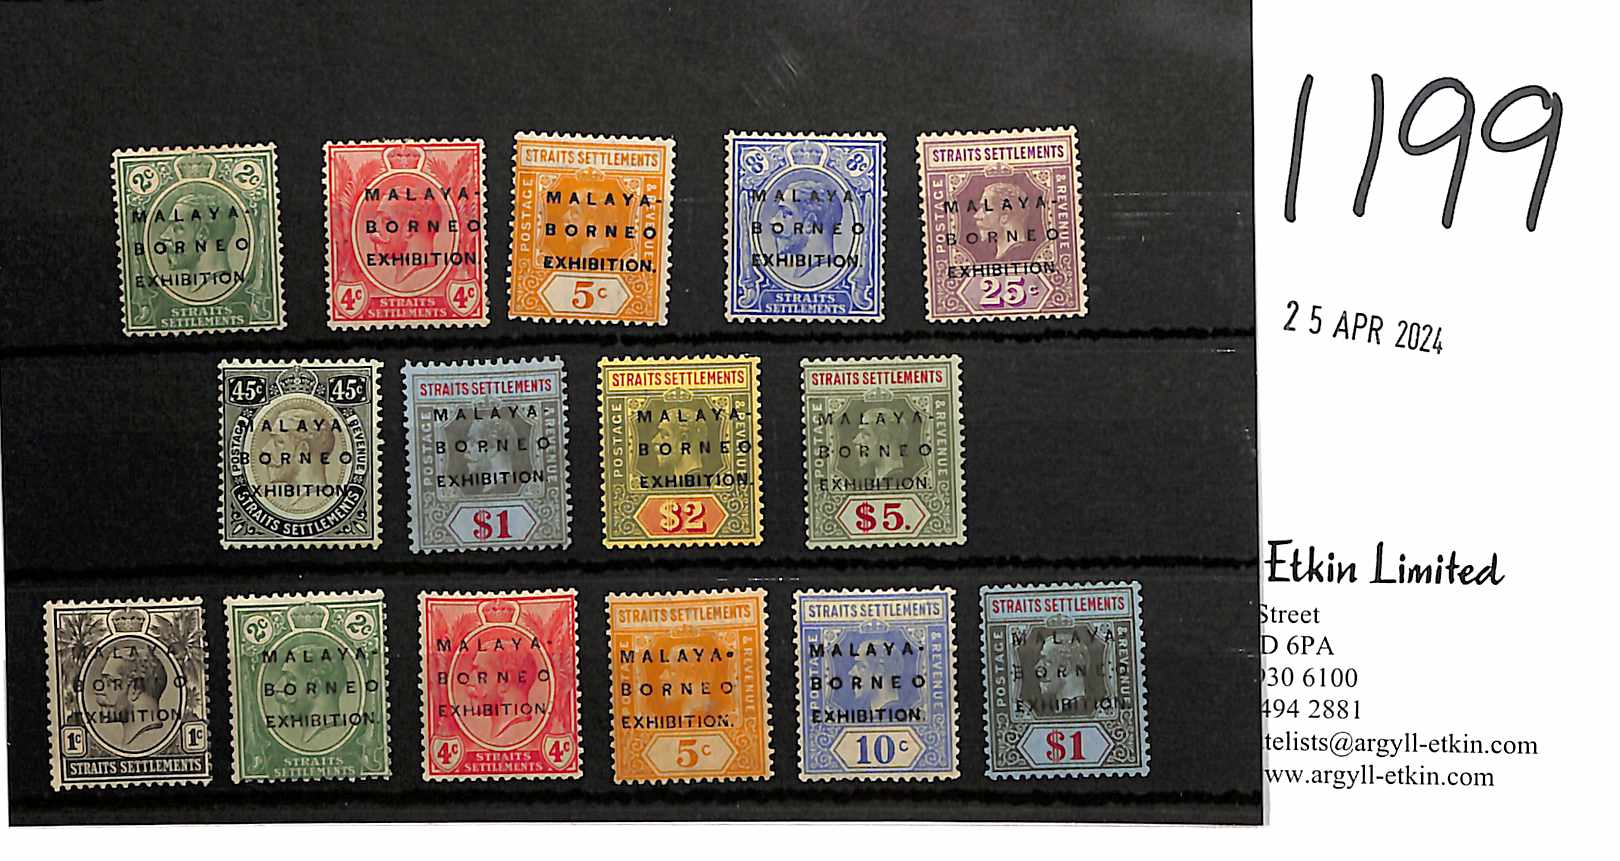 1922 Malaya-Borneo Exhibition, Multiple Crown CA 2c - $5 and Multiple Script CA 1c - $1 sets fine - Image 3 of 3